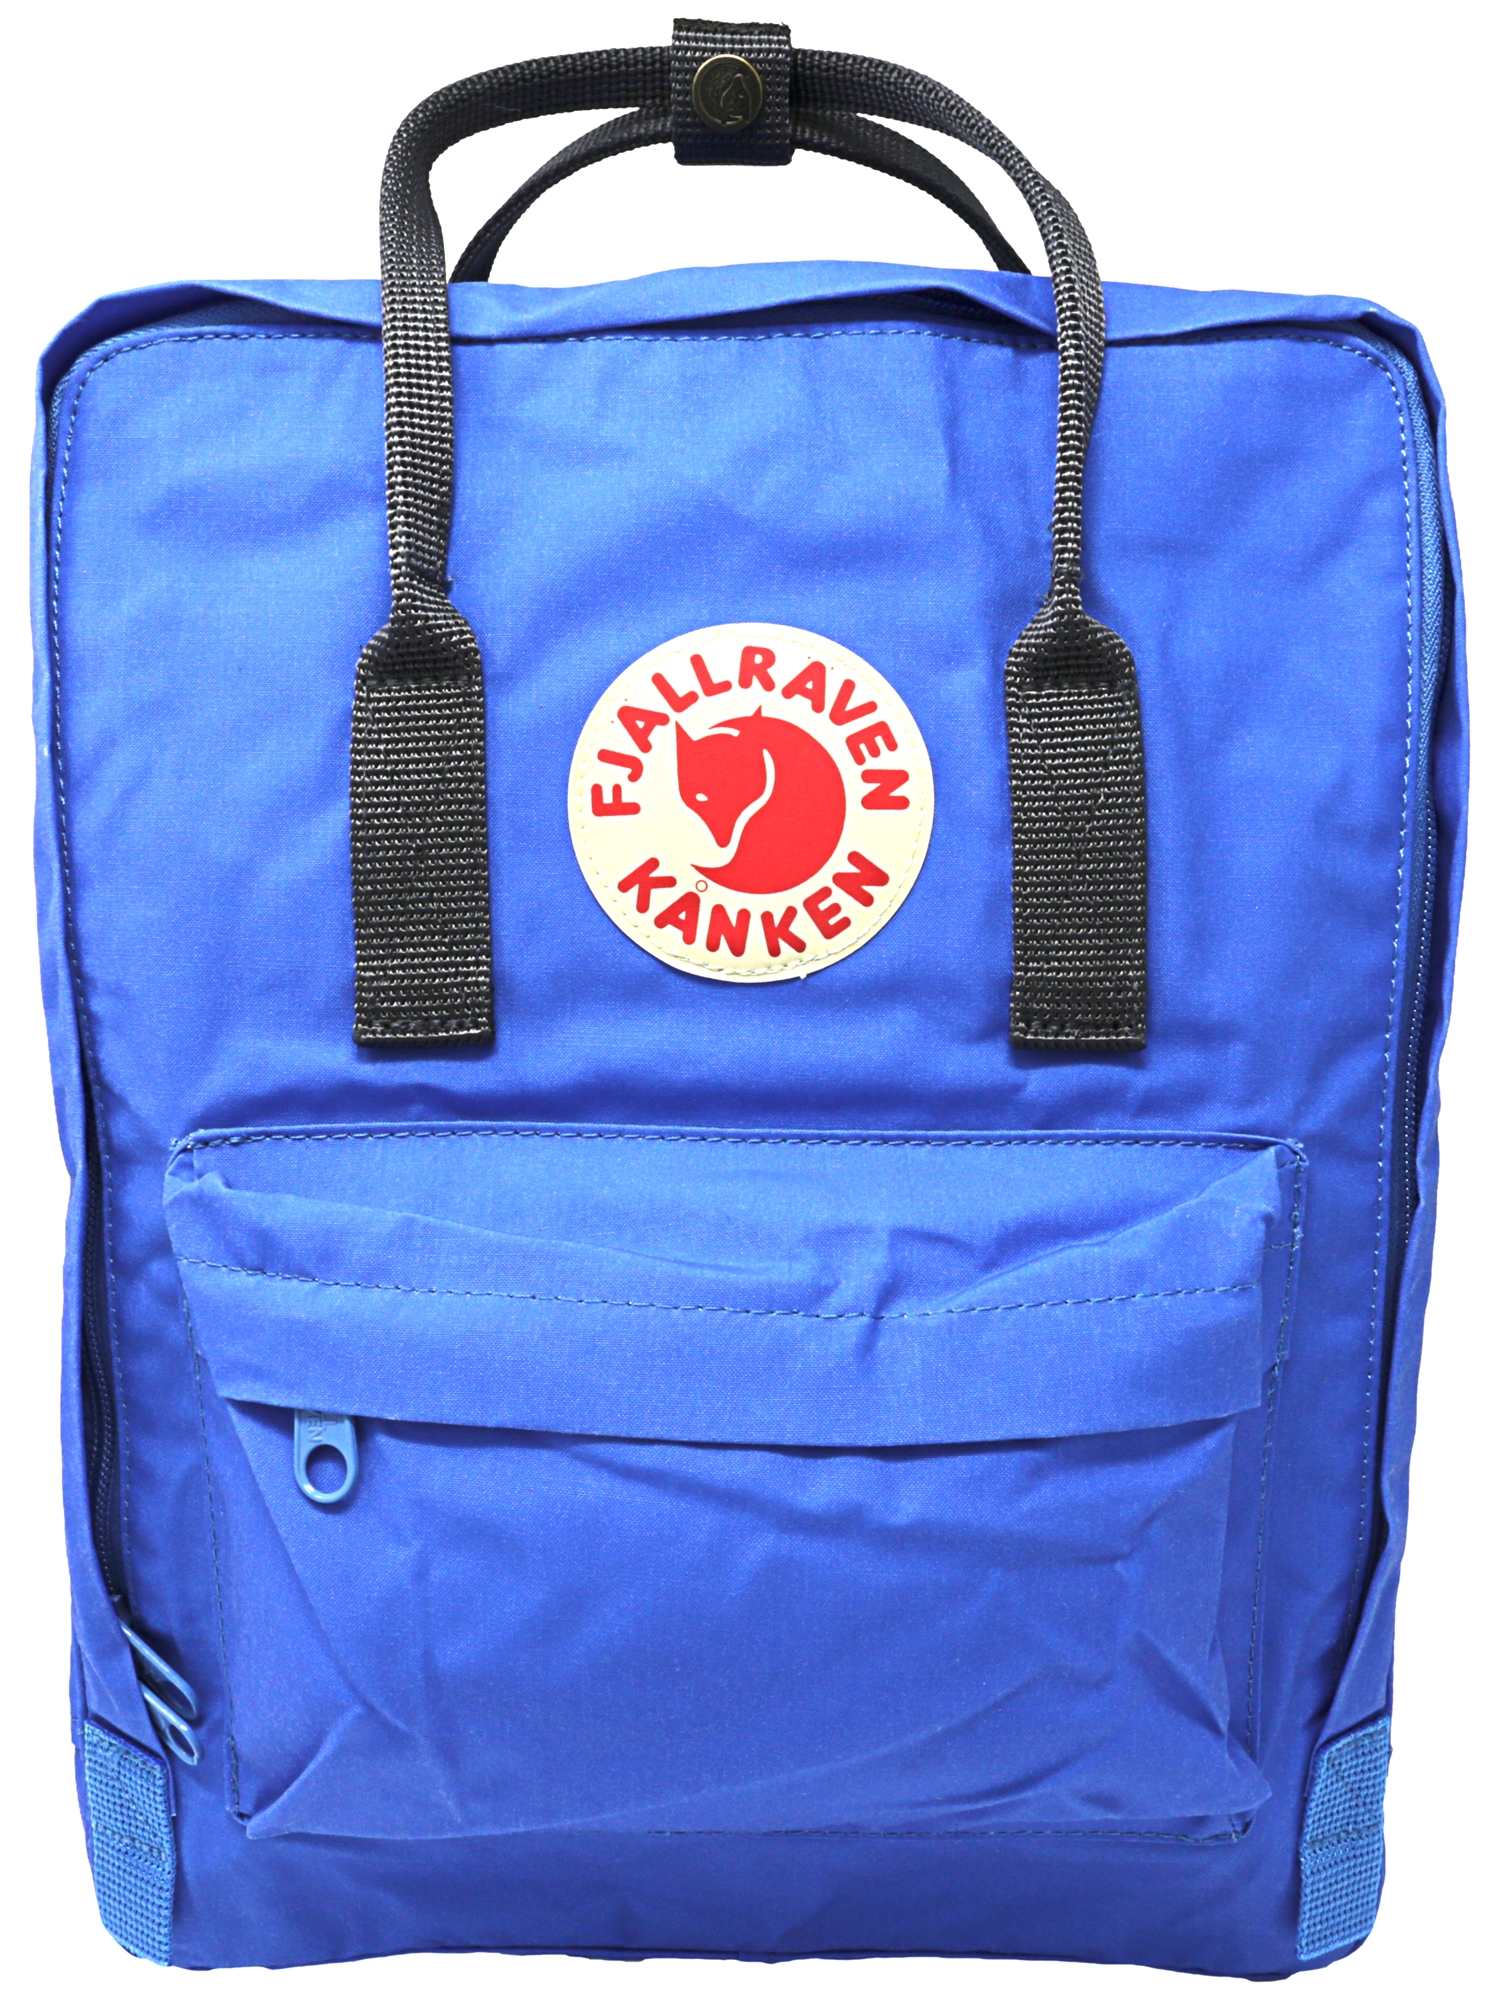 Fjallraven - Kanken Classic Backpack for Everyday - UN Blue/Navy - image 1 of 4